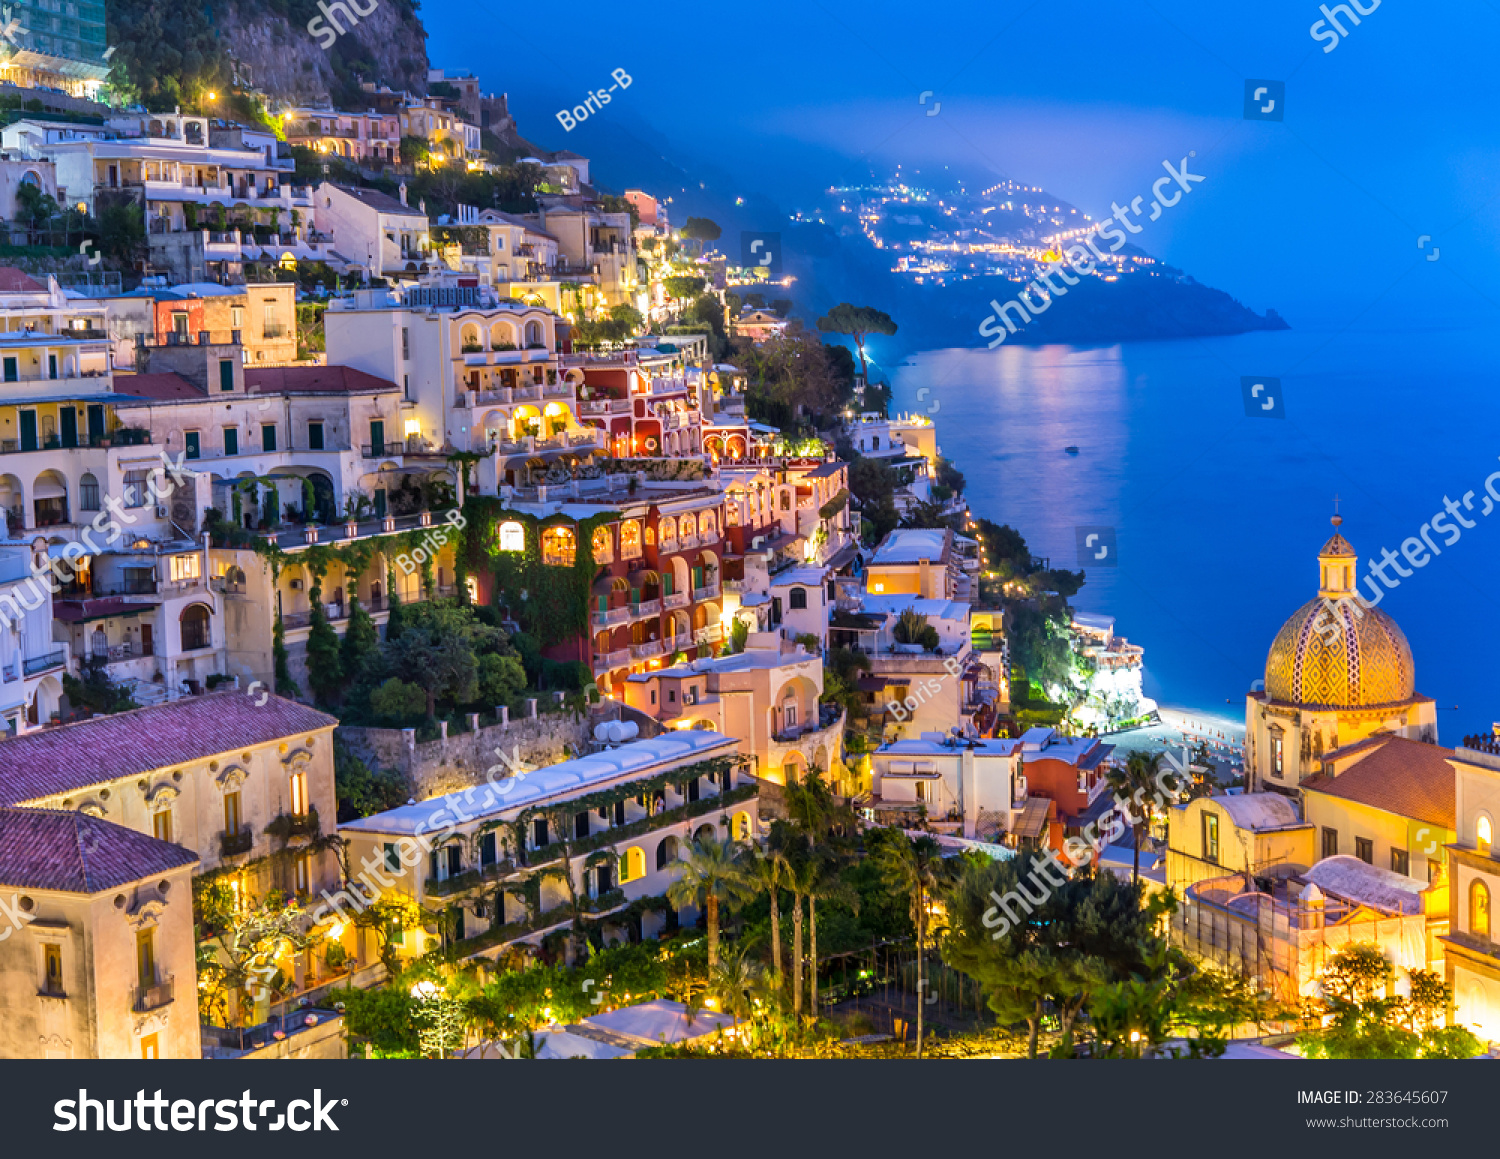 Night view of Positano village at Amalfi Coast, Italy. #283645607